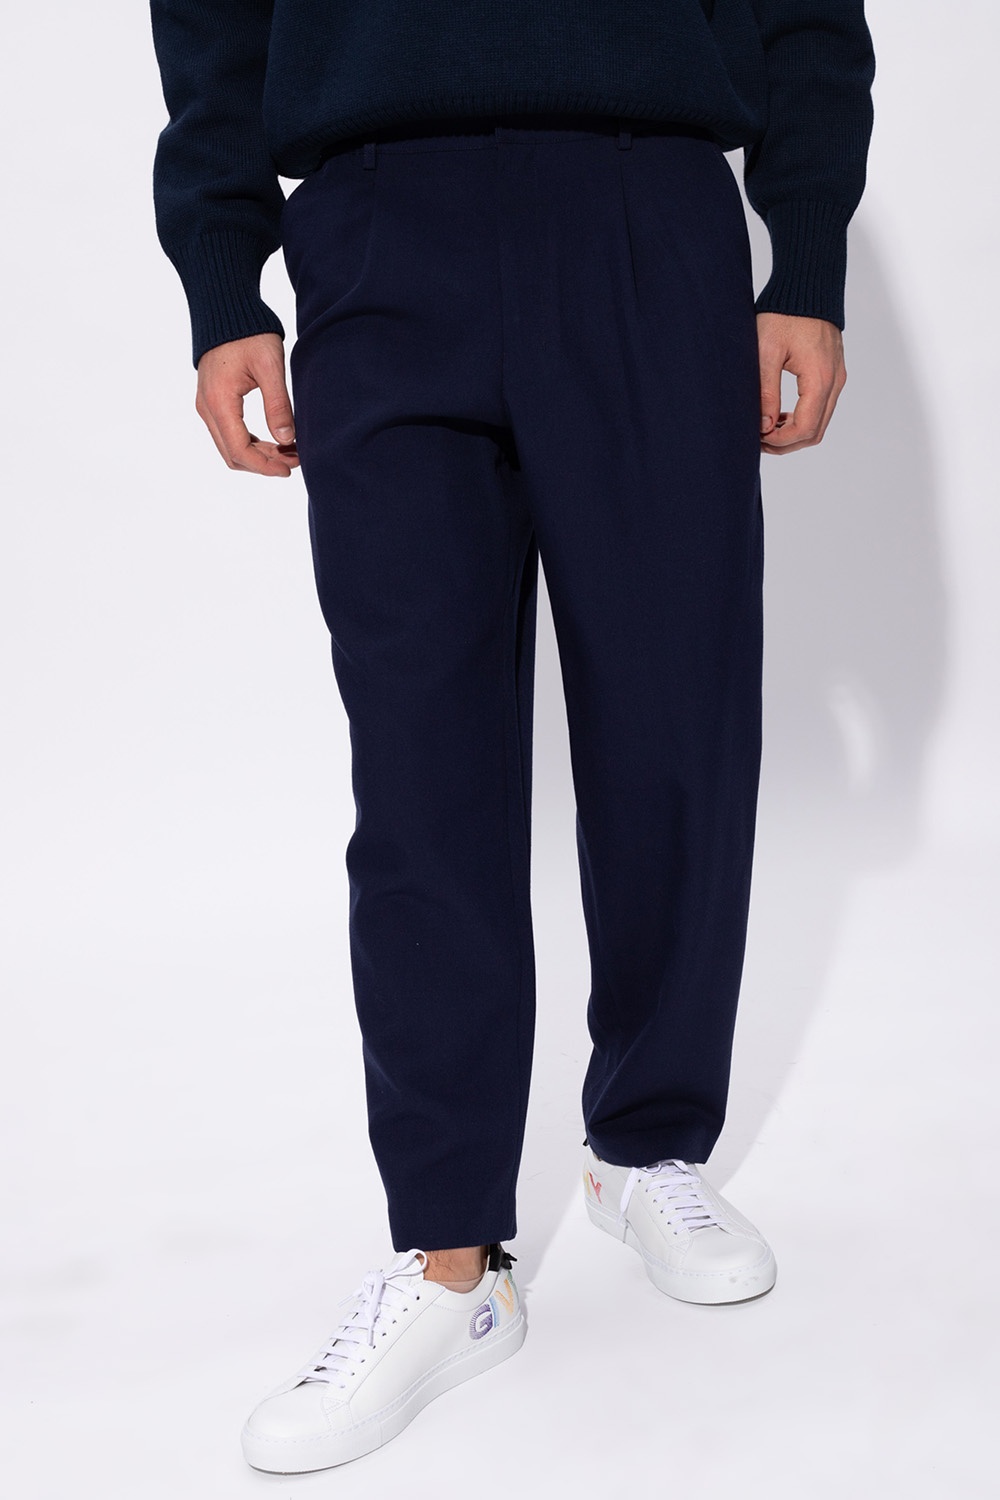 polka-dot high-waist shorts Wool pleat-front trousers